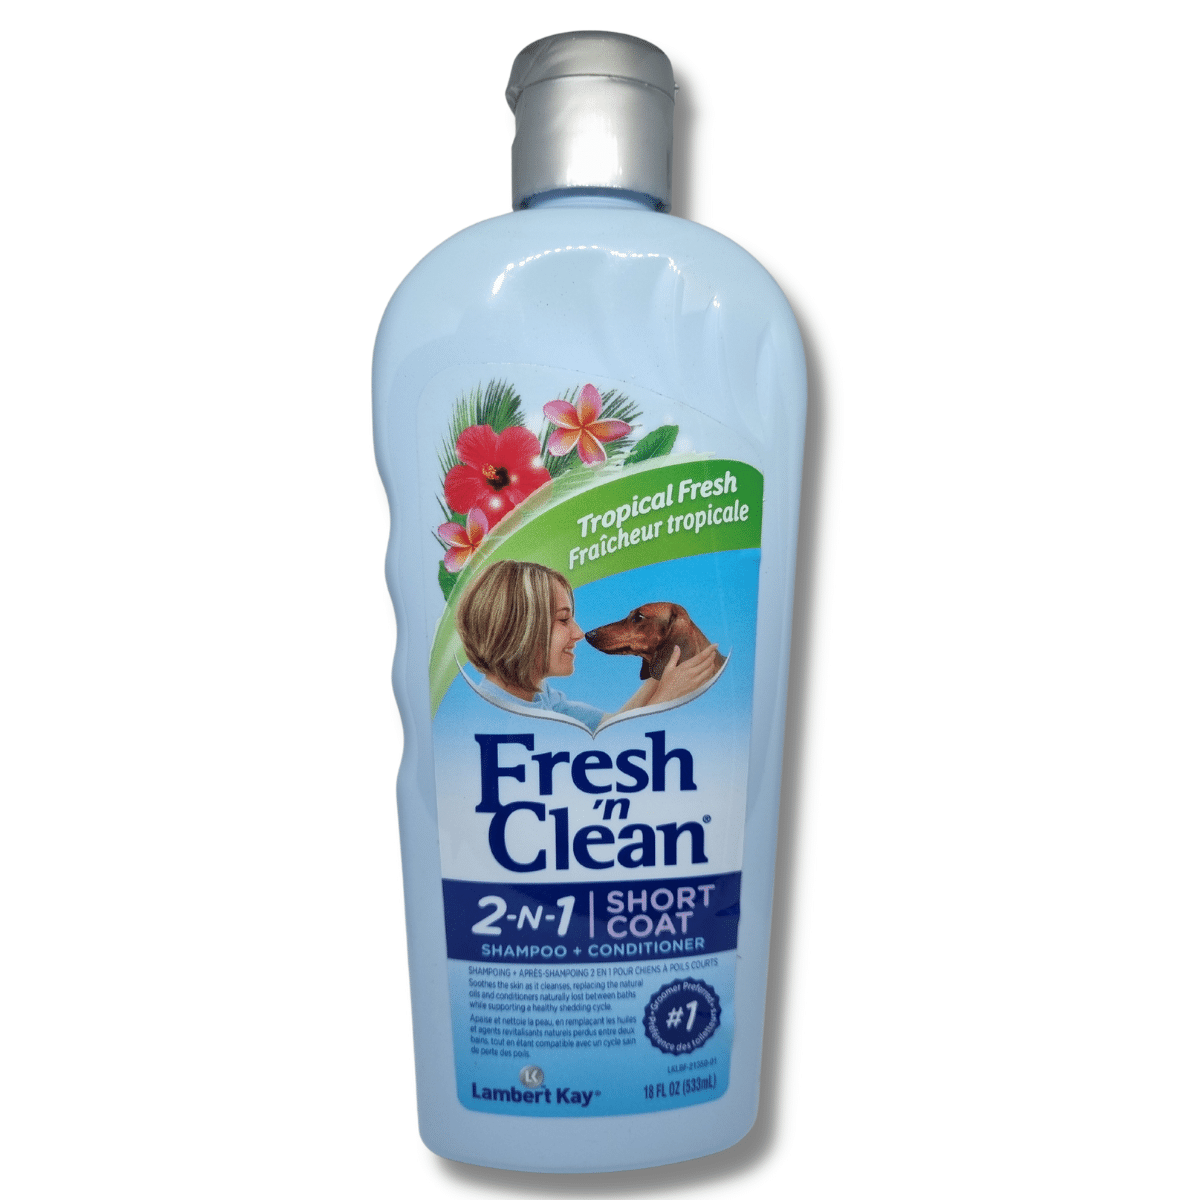 Lambert Kay Fresh 'n Clean 2-N-1 Short Coat Shampoo + Conditioner: Tropical Fresh (533mL)